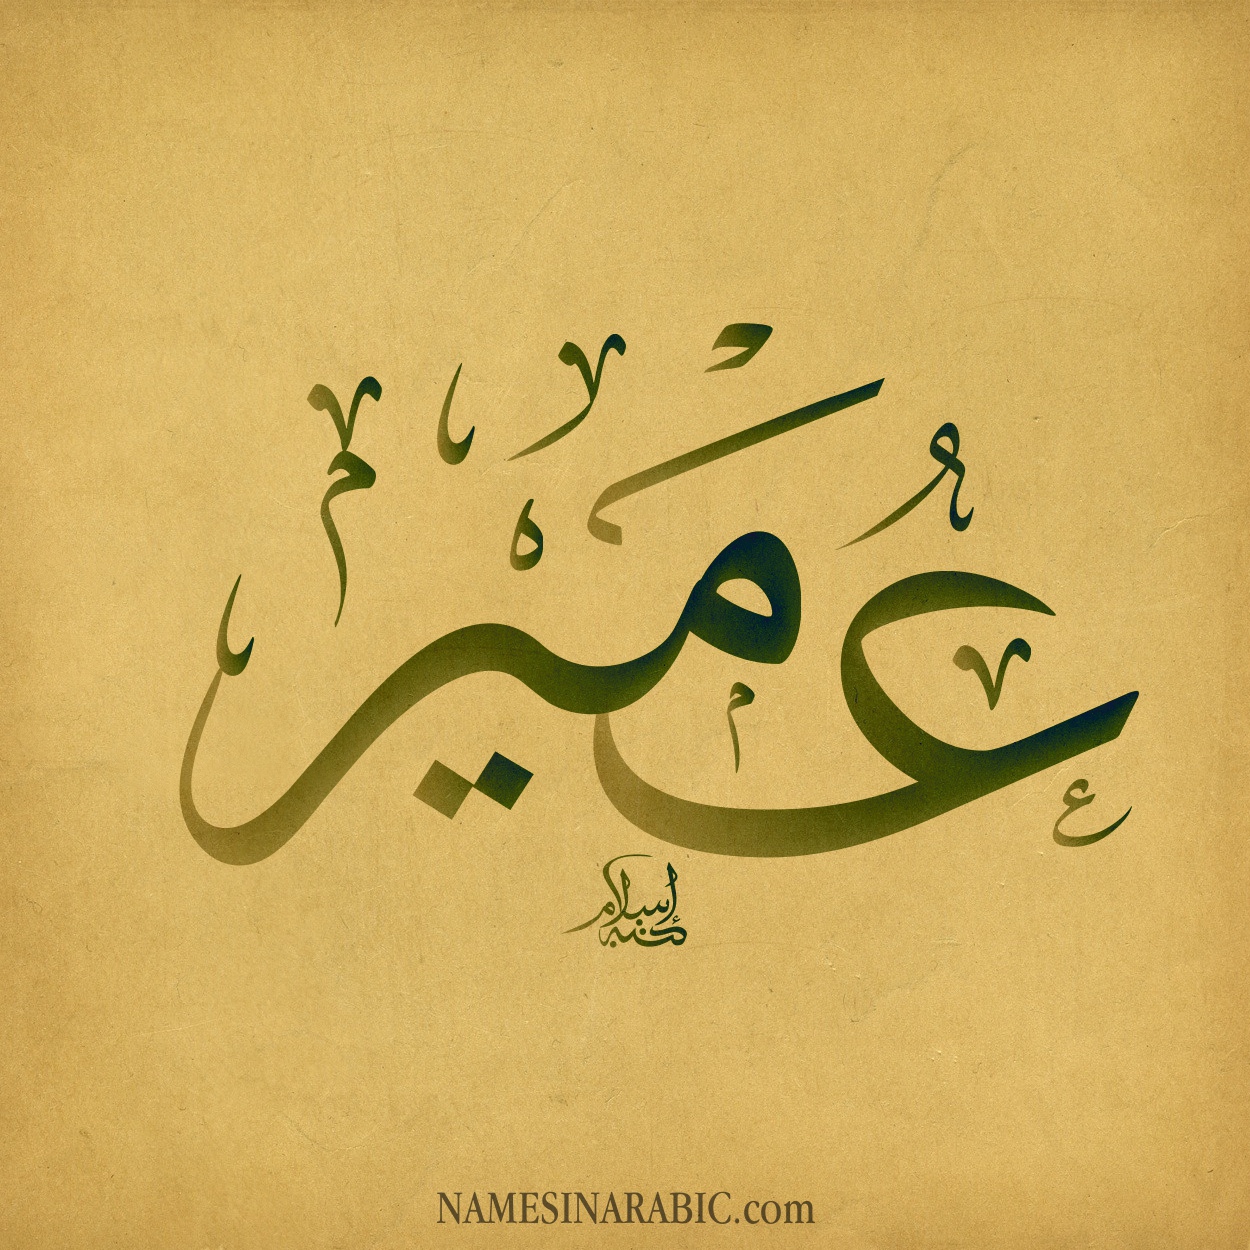 Umair-Name-in-Arabic-Thuluth-Calligraphy.jpg